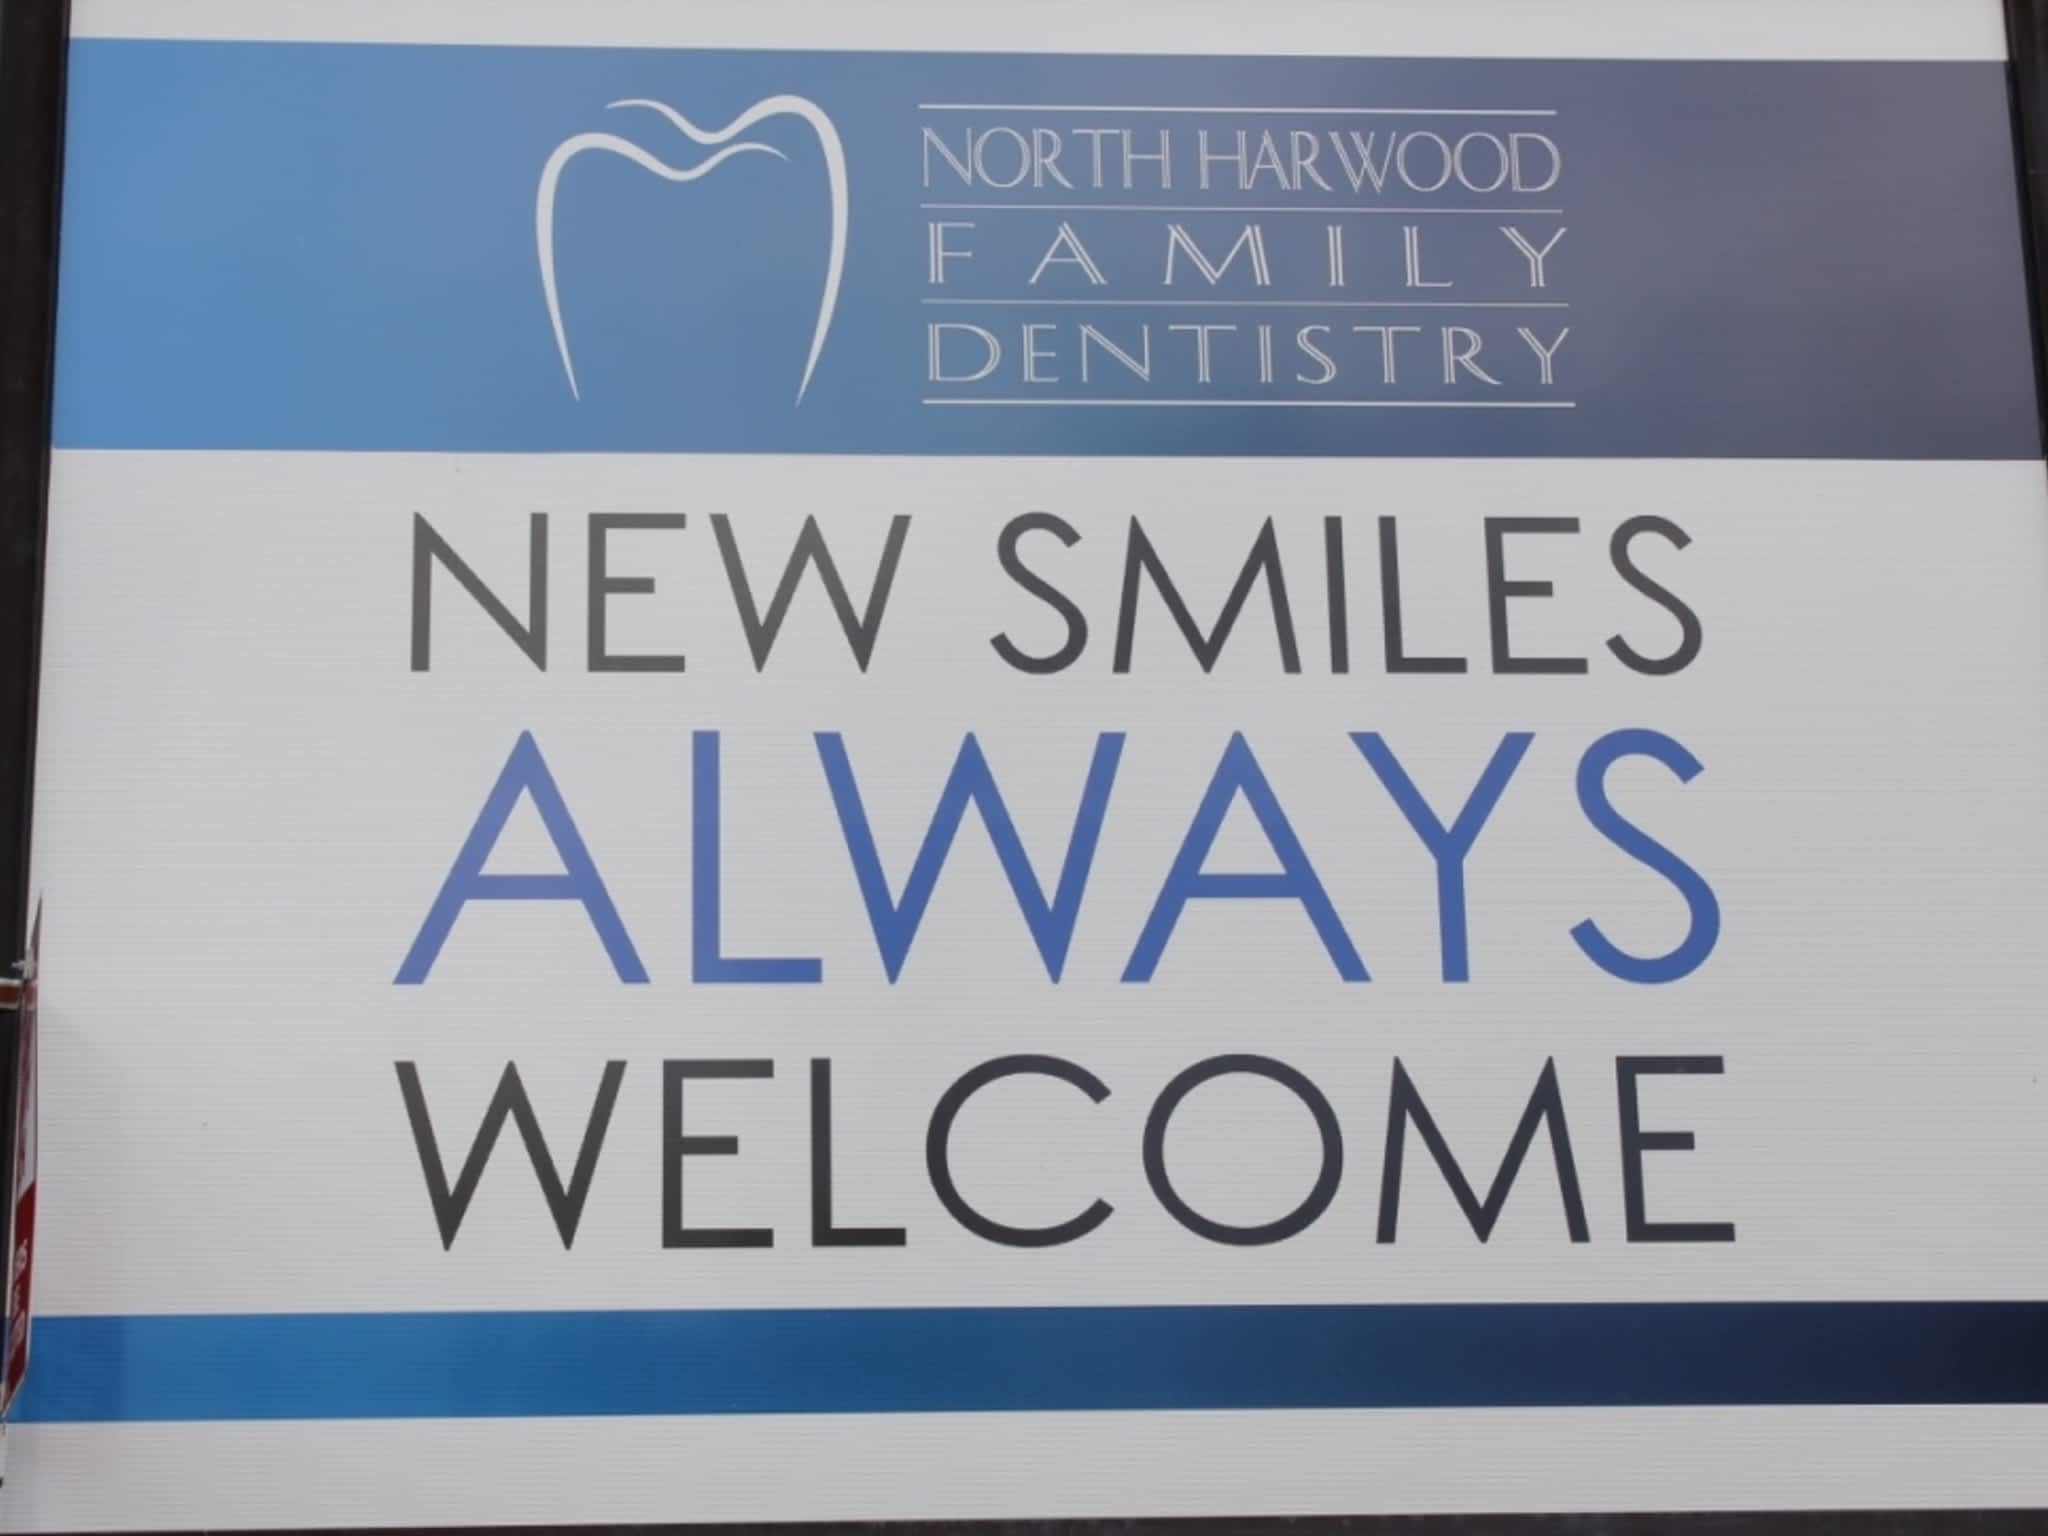 photo North Harwood Family Dentistry